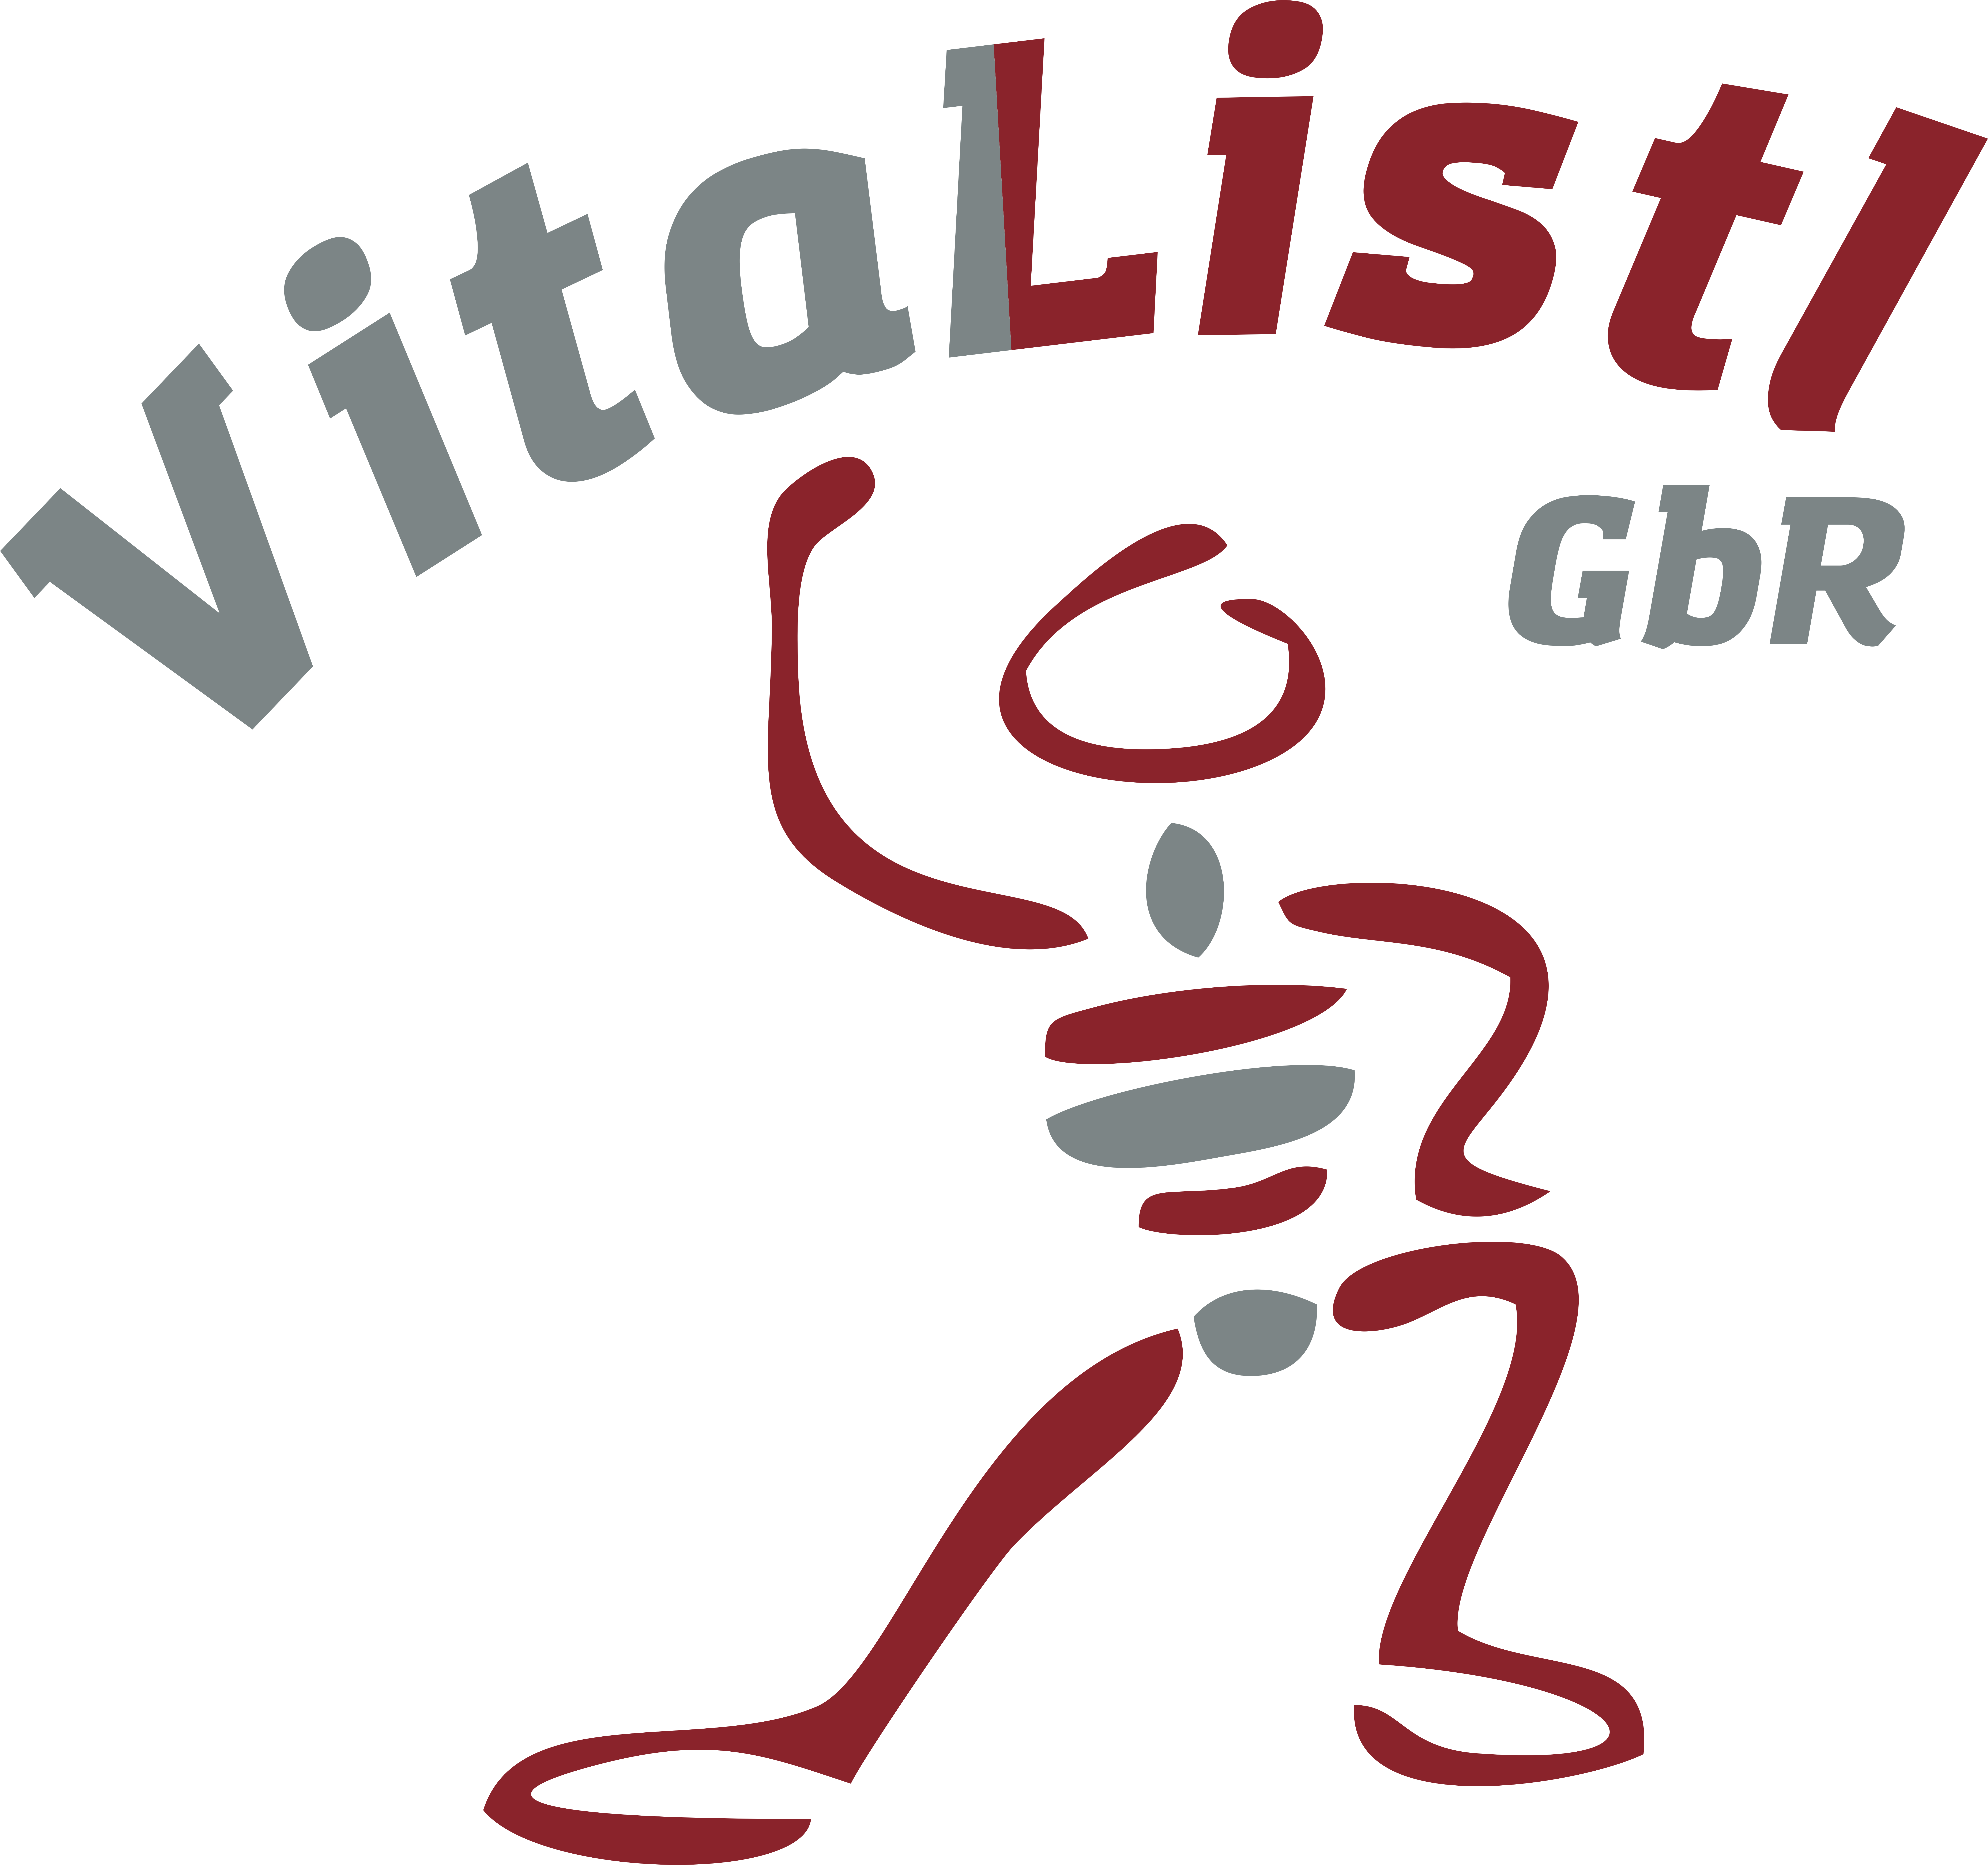 Vitalistl GbR